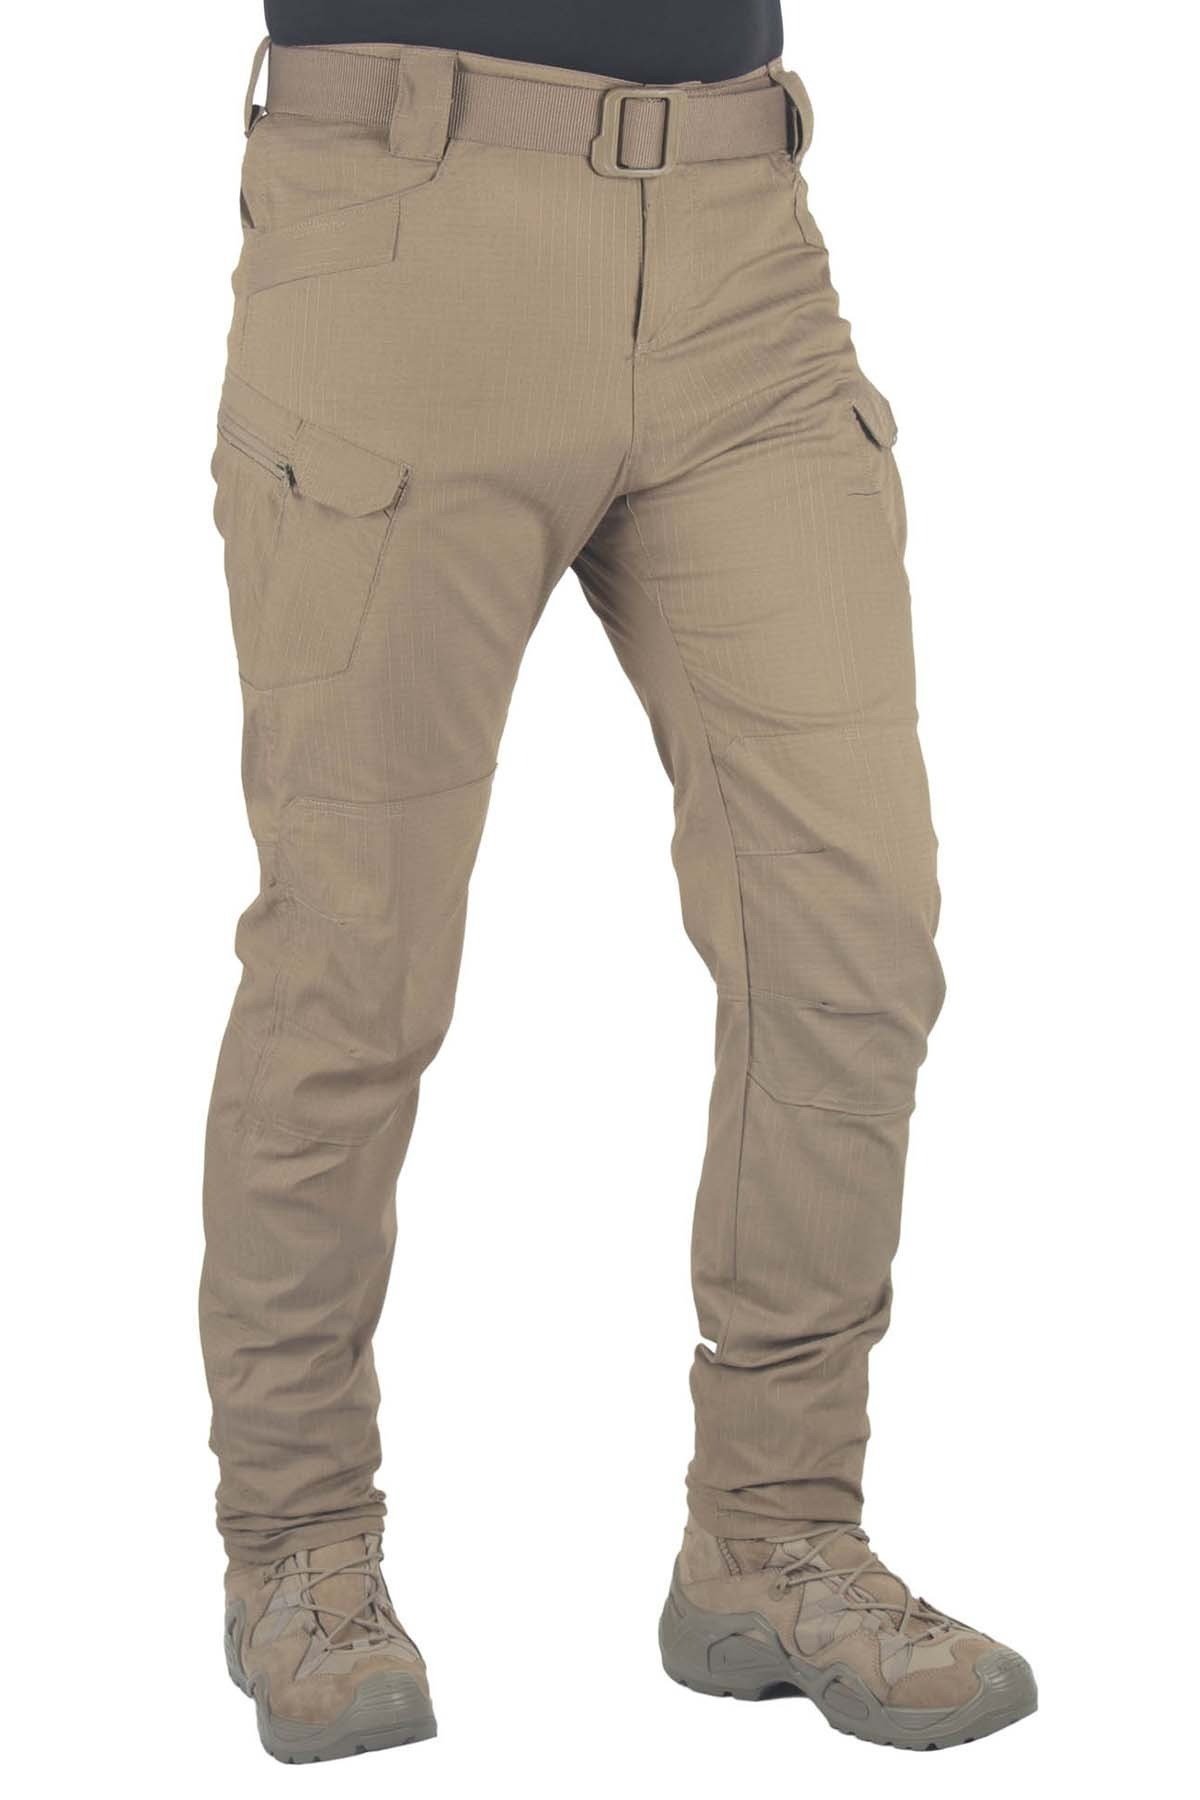 5.11 Modeli Camel Outdoor Taktik Pantolon - Polis Sepeti